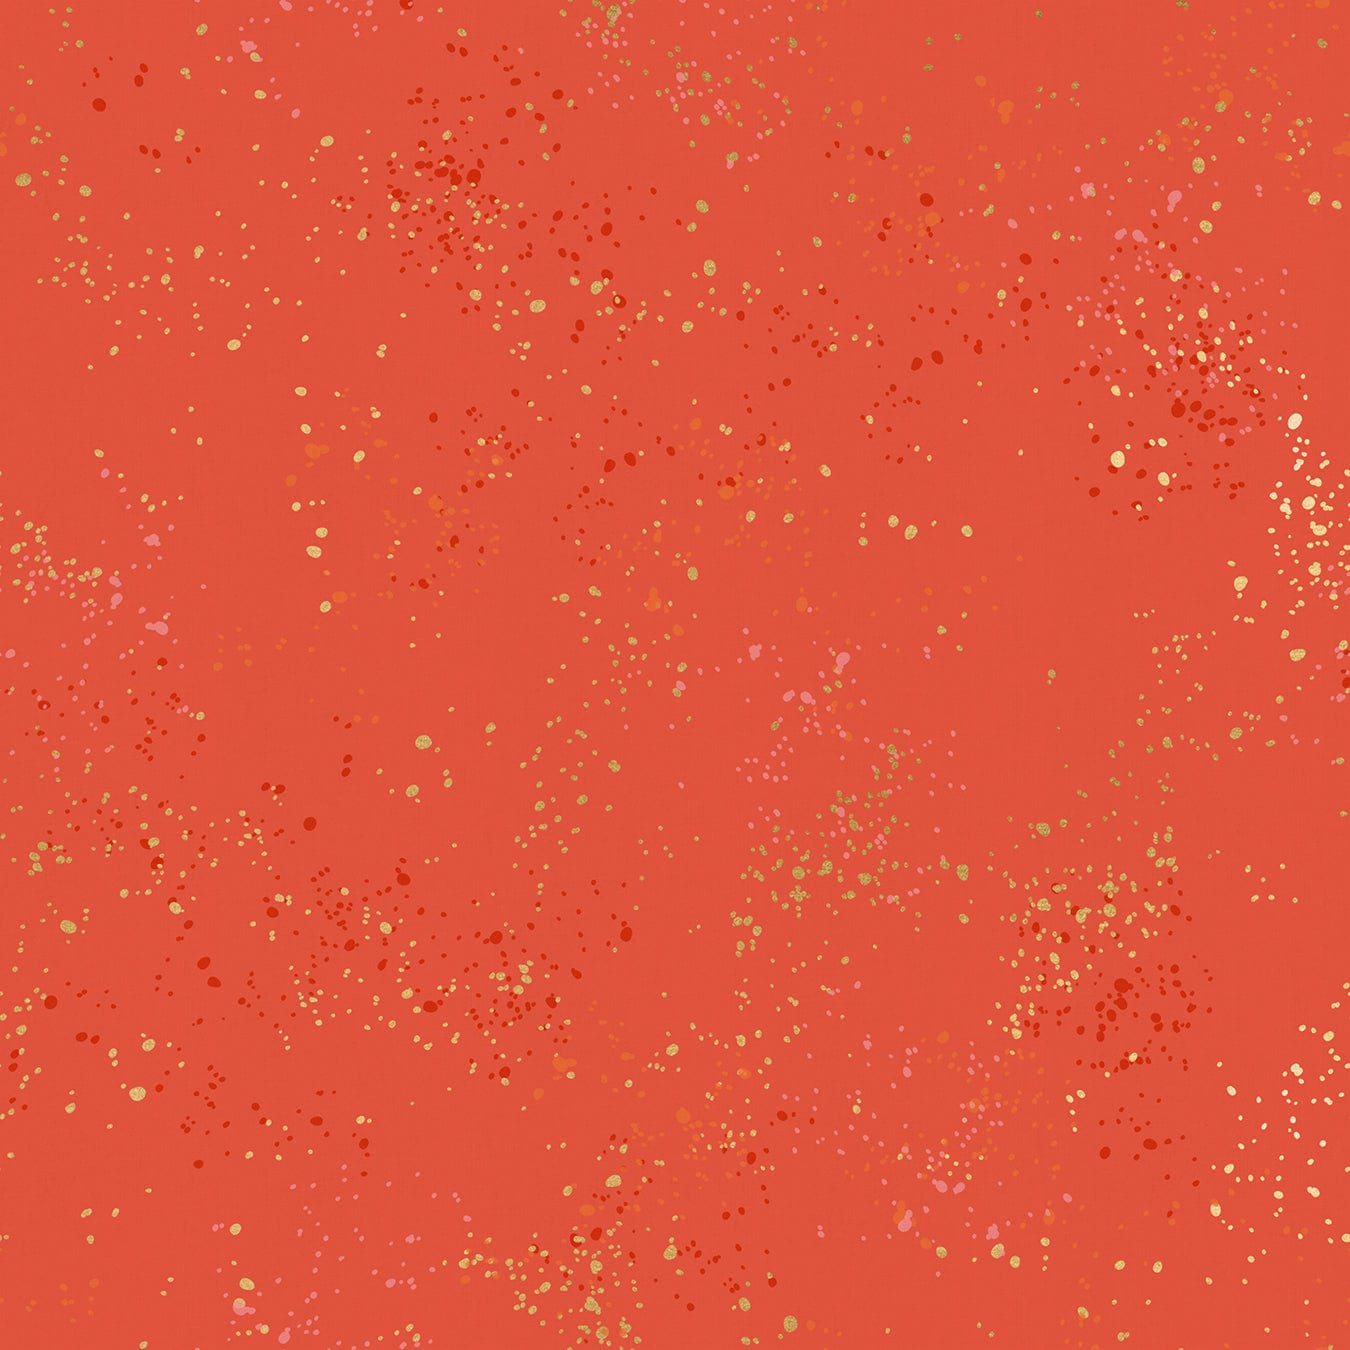 Ruby Star Fabric Speckled Metallic Festive RS5027 75M